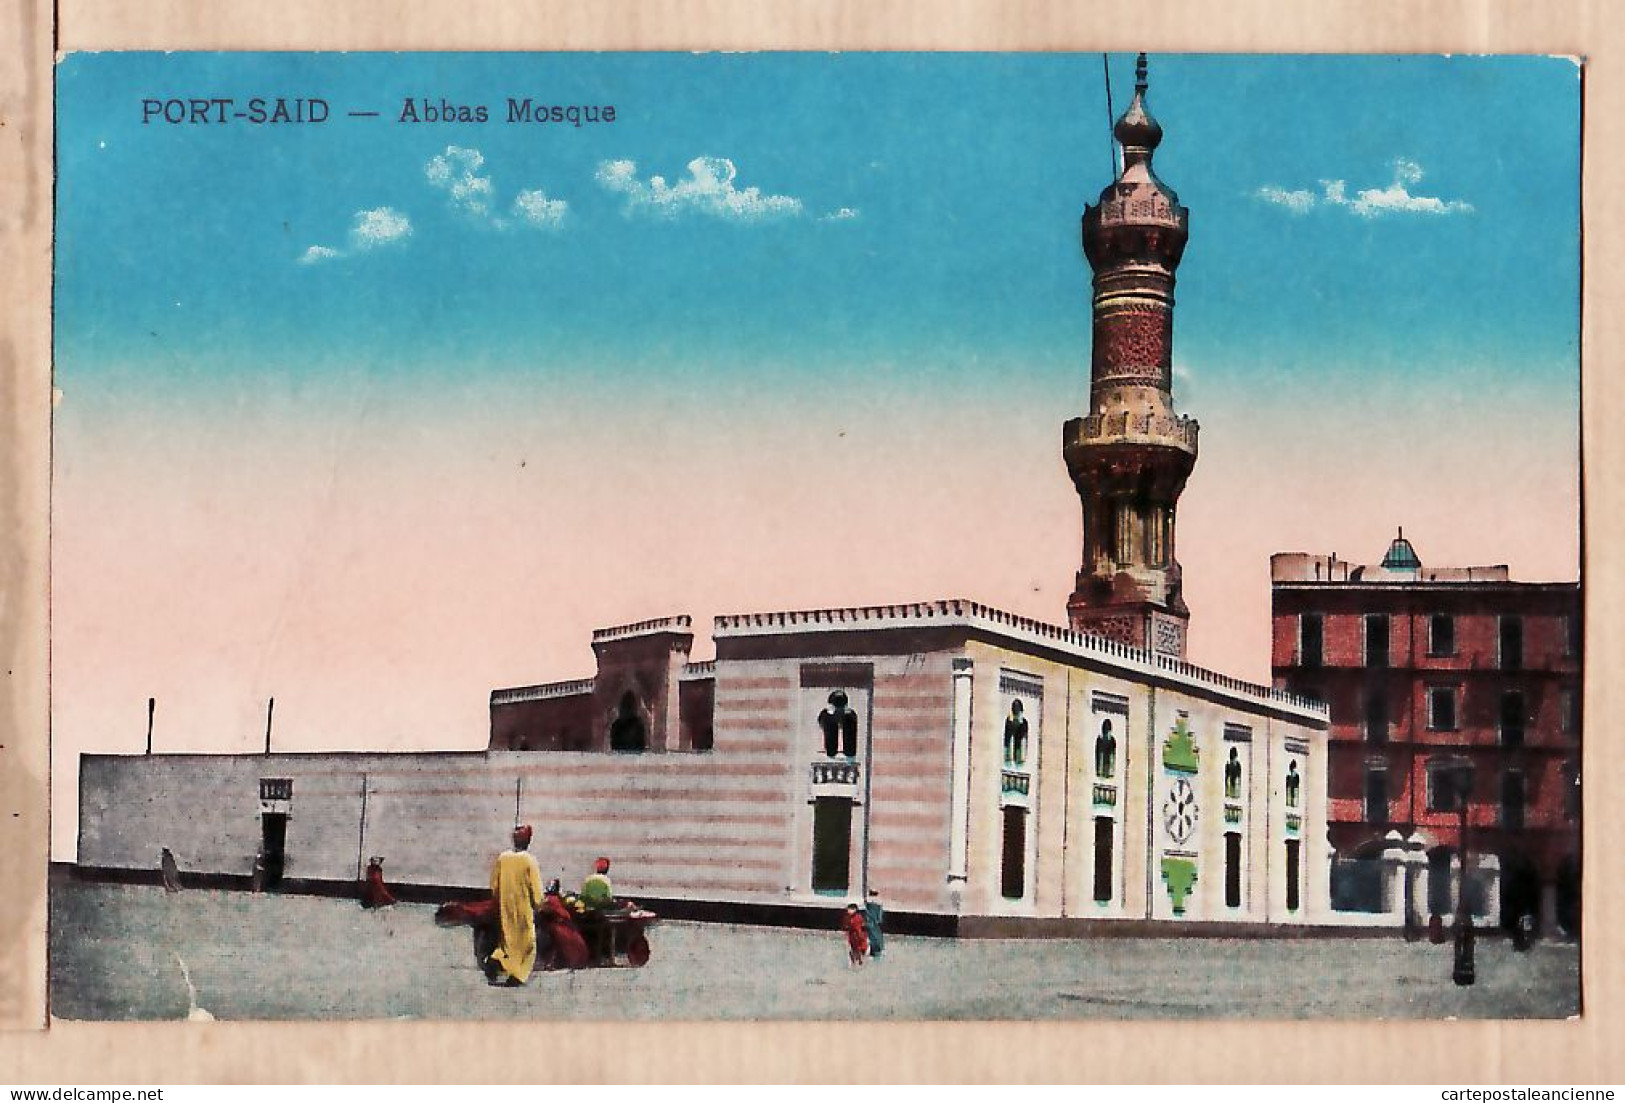 01850 / Egypt SUEZ PORT-SAÏD ABBAS MOSQUE 1910s Litho Color CAIRO POST CARD TRUST 369 Egypte Agypten Egipto - Port-Saïd